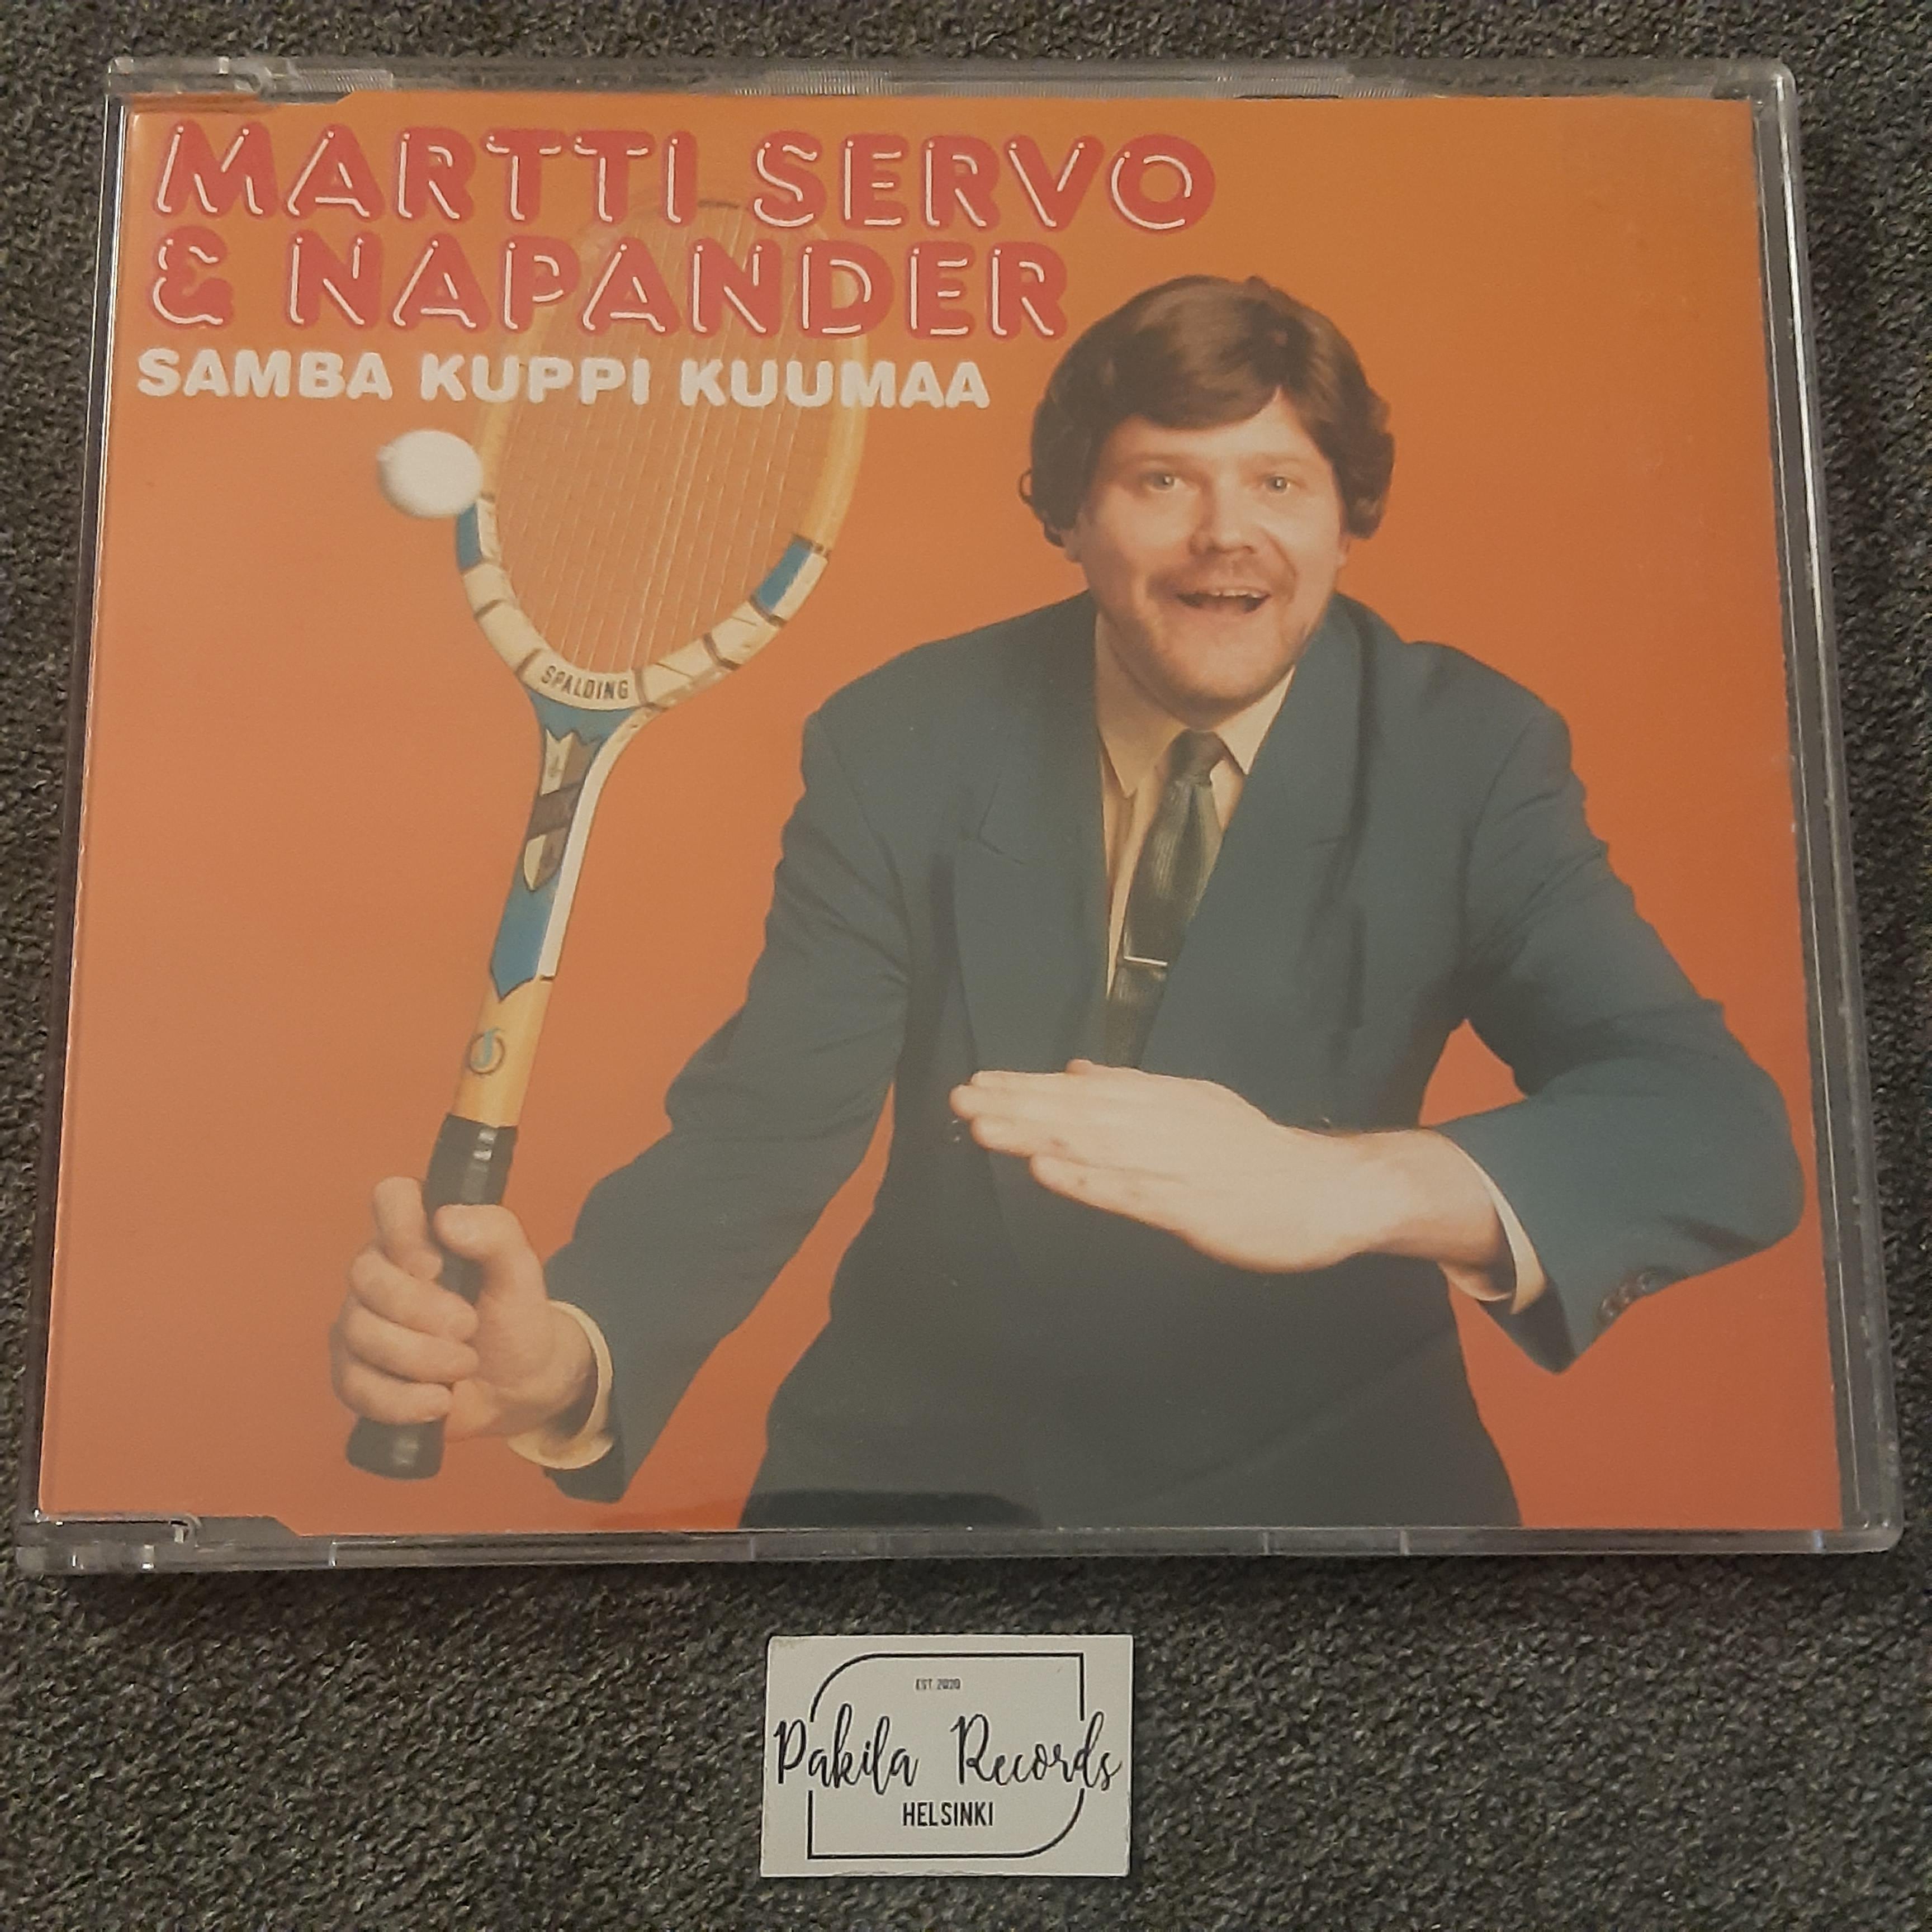 Martti Servo & Napander - Samba kuppi kuumaa - CDS (käytetty)